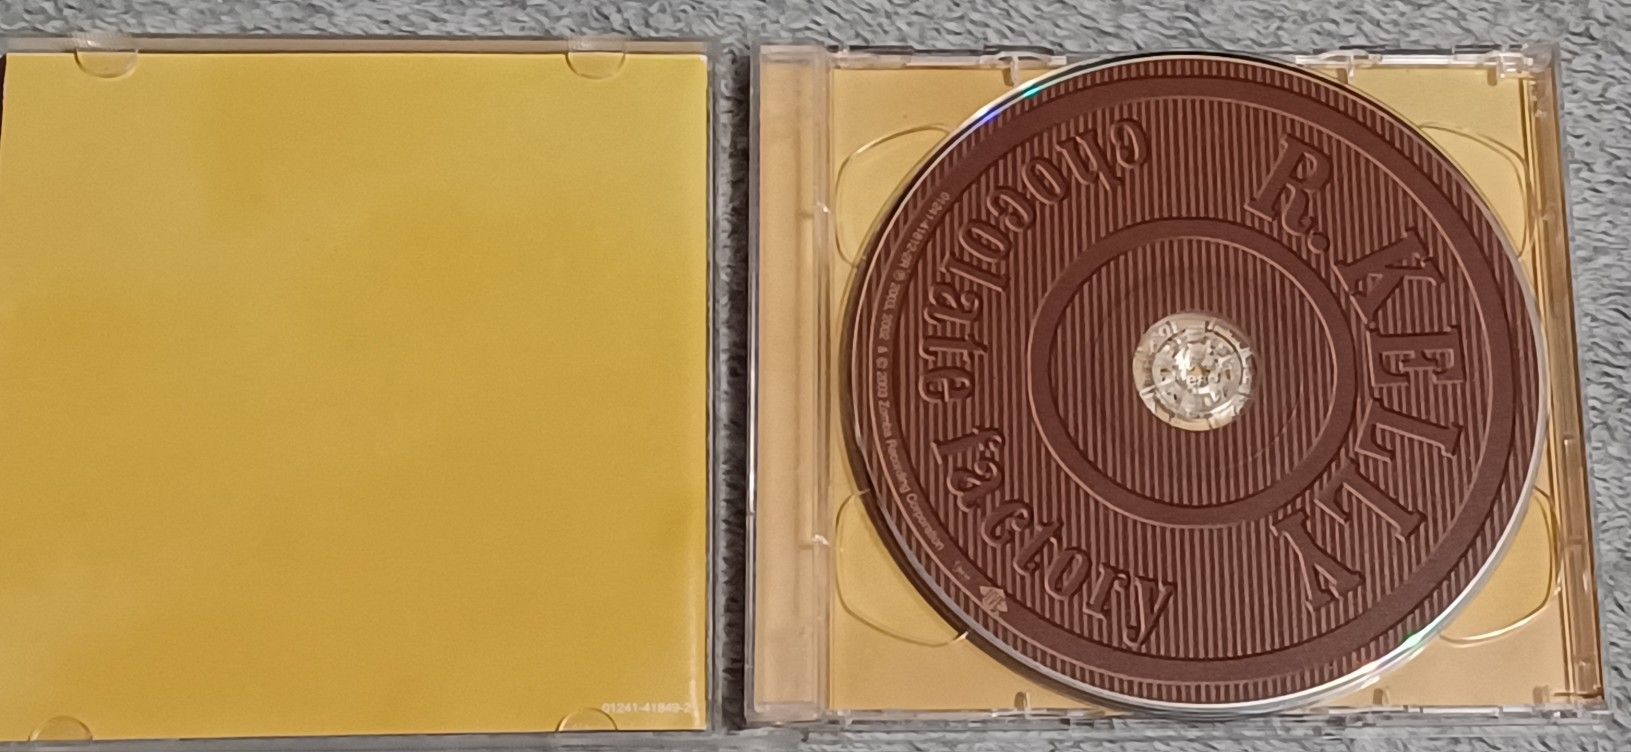 Music Hip Hop CD R Kelly Double Disc Chocolate Factory Music Rap Slow Jam